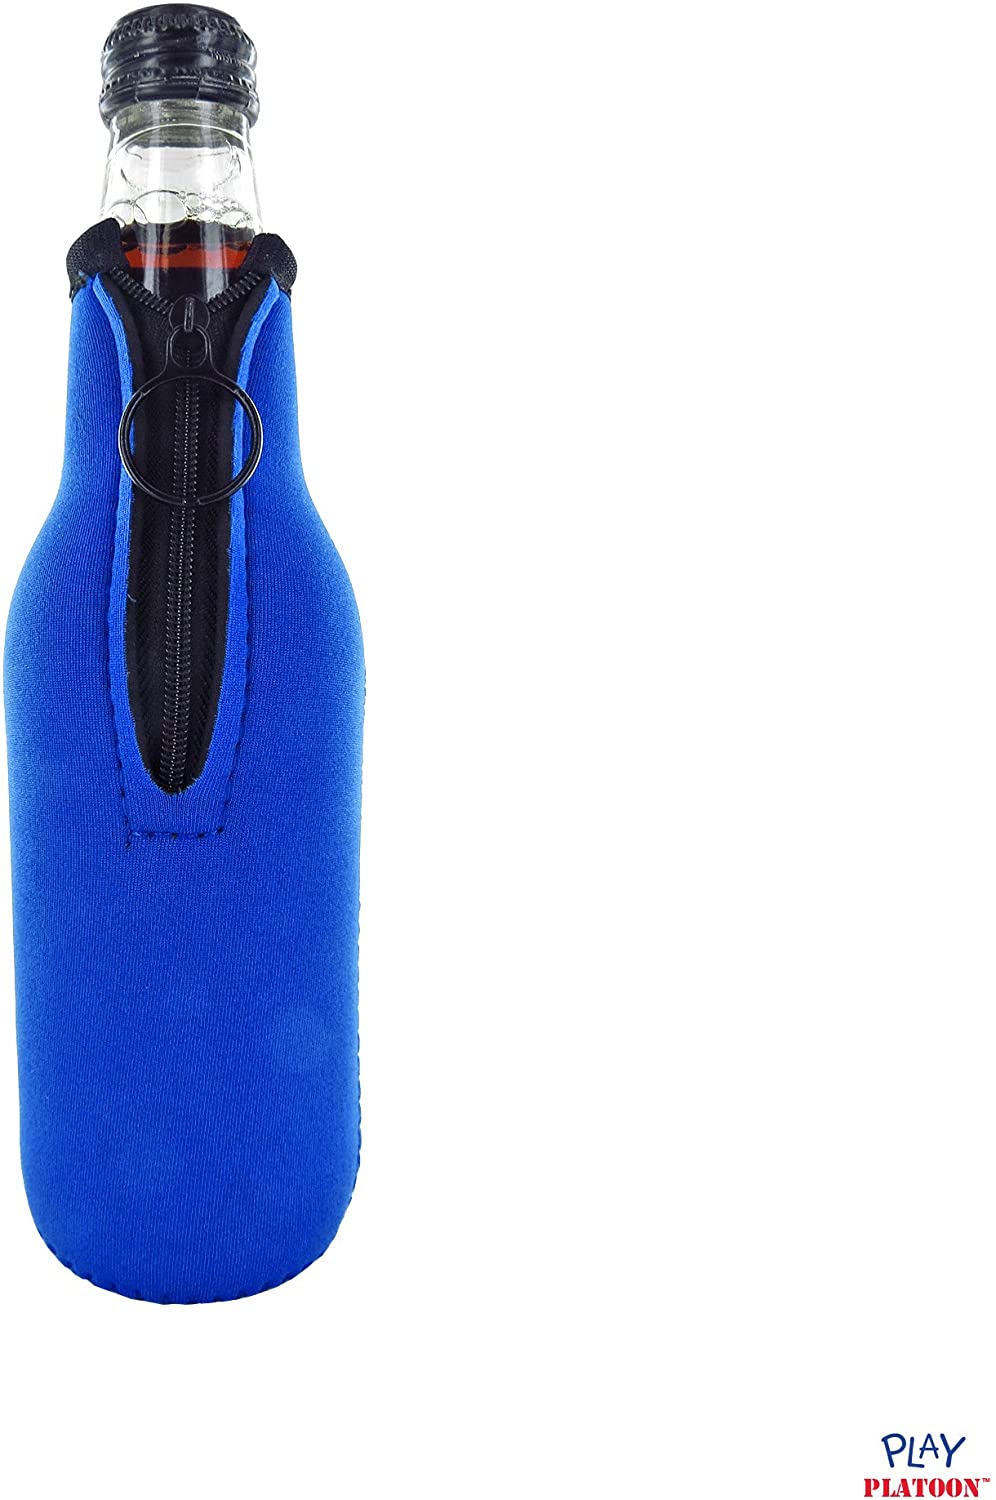 Koozie basic collapsible bottle kooler